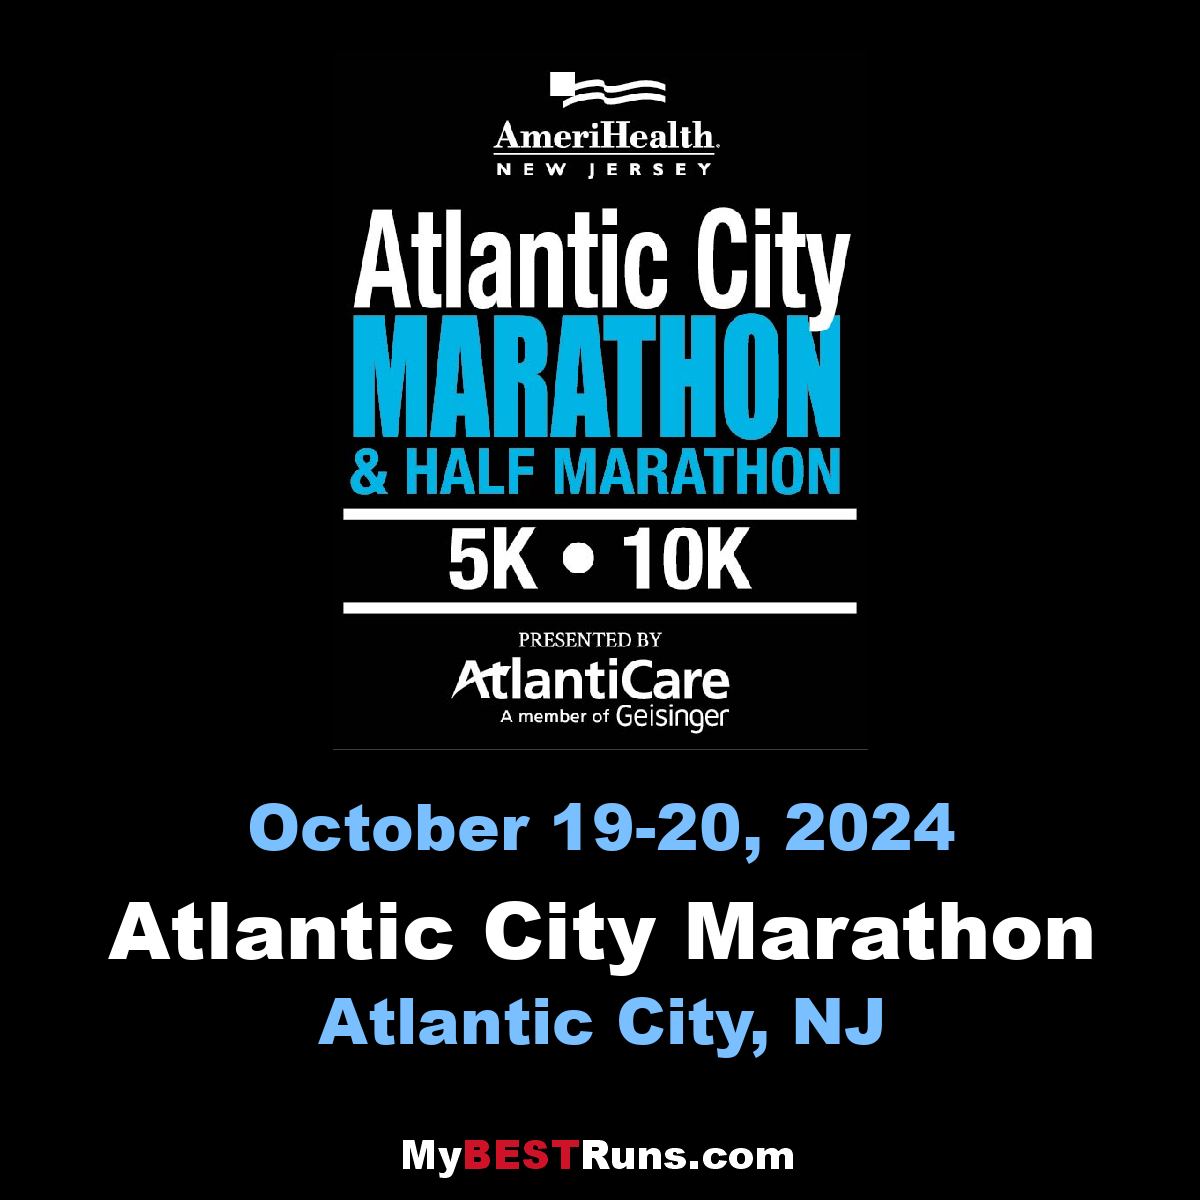 Atlantic City Marathon Atlantic City, NJ 10/18/2020 My BEST Runs